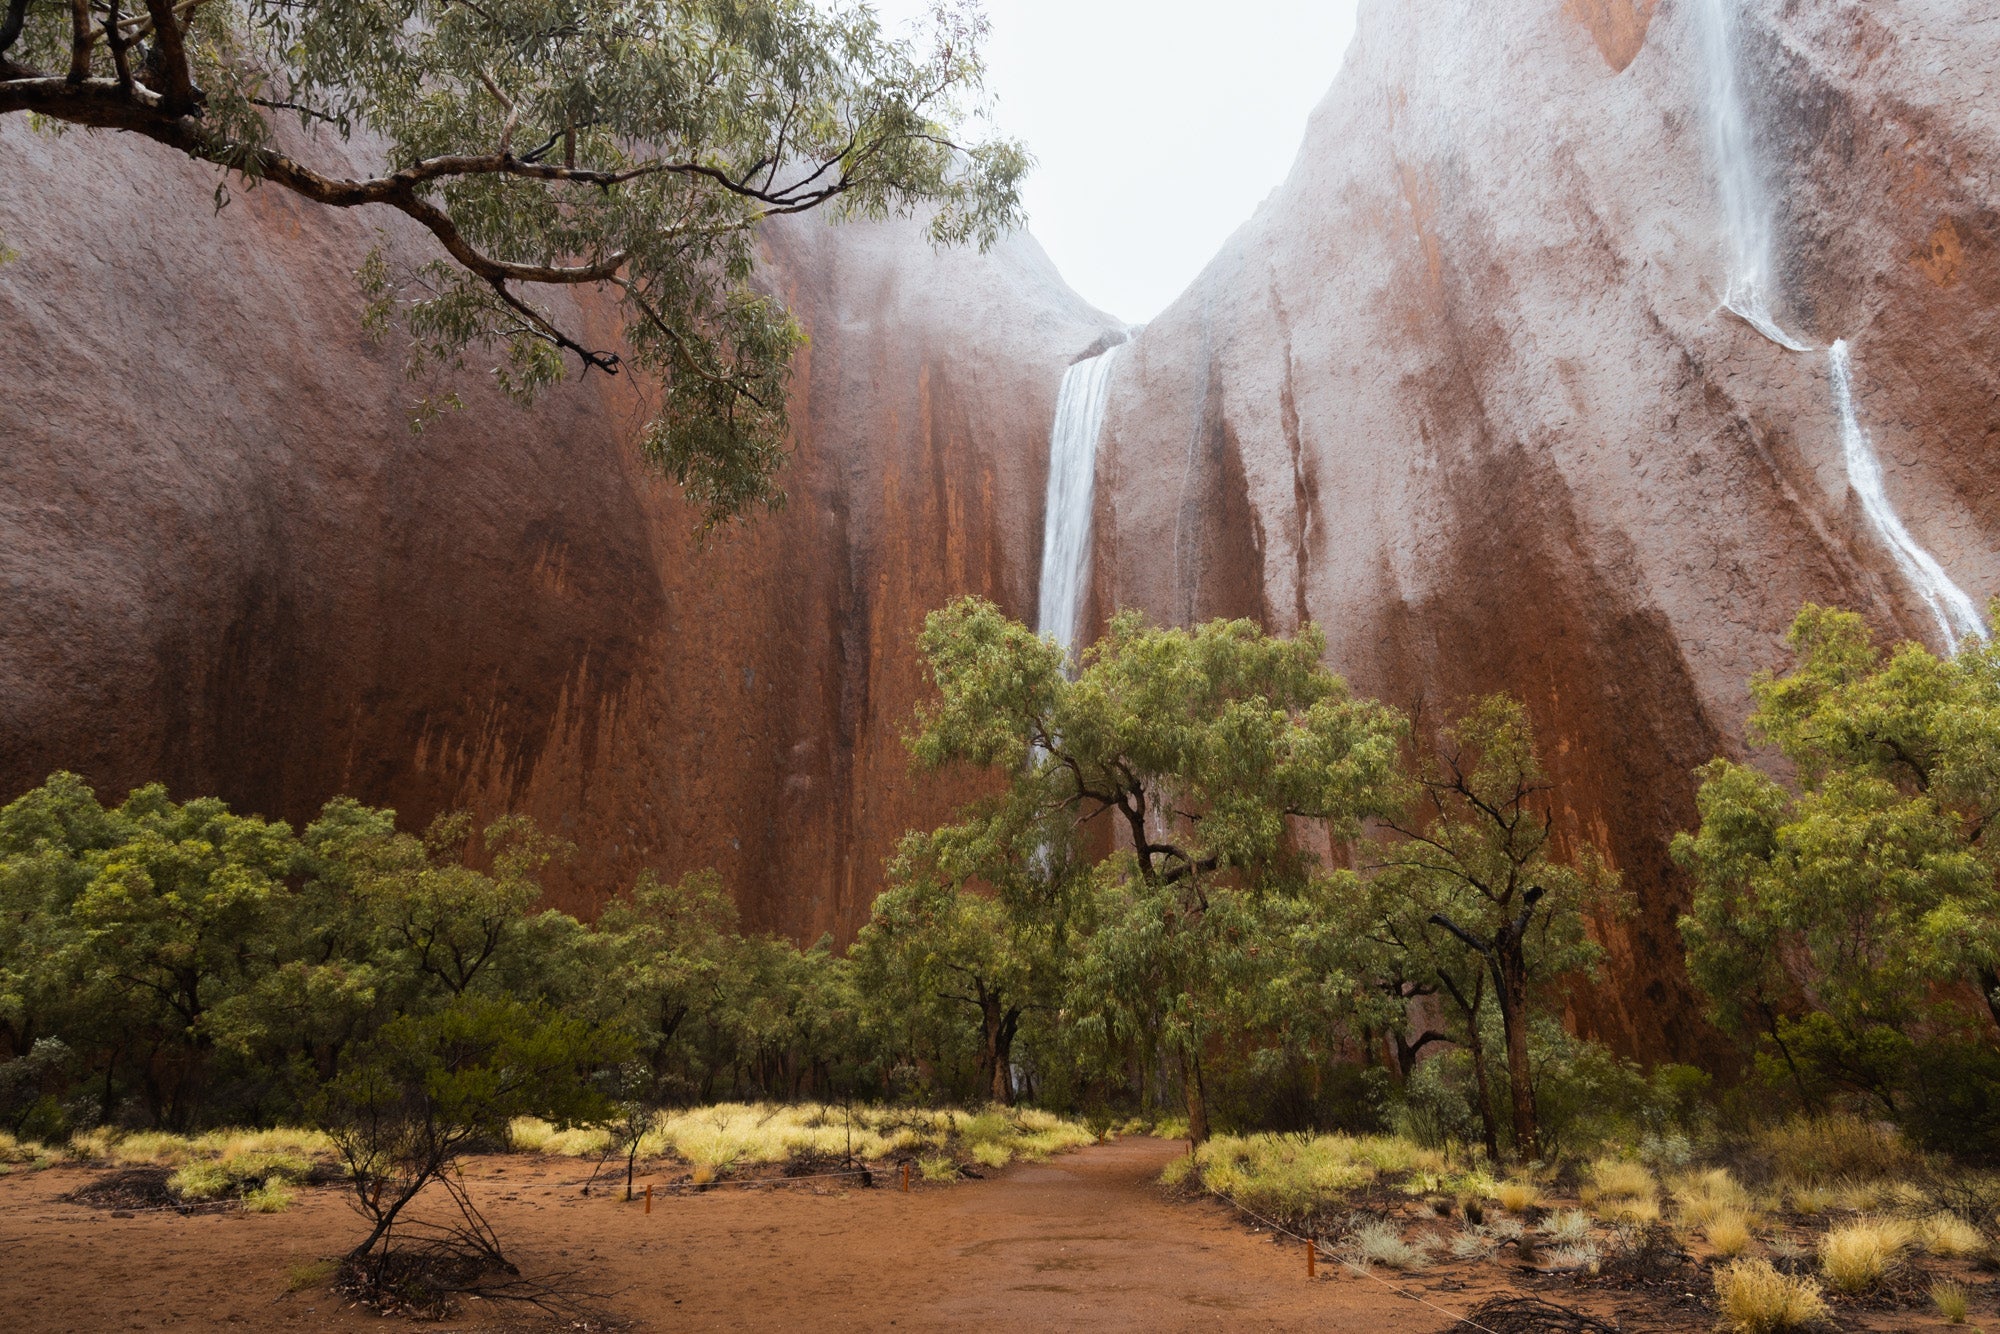 Chasing waterfalls in the desert - Australia Unseen